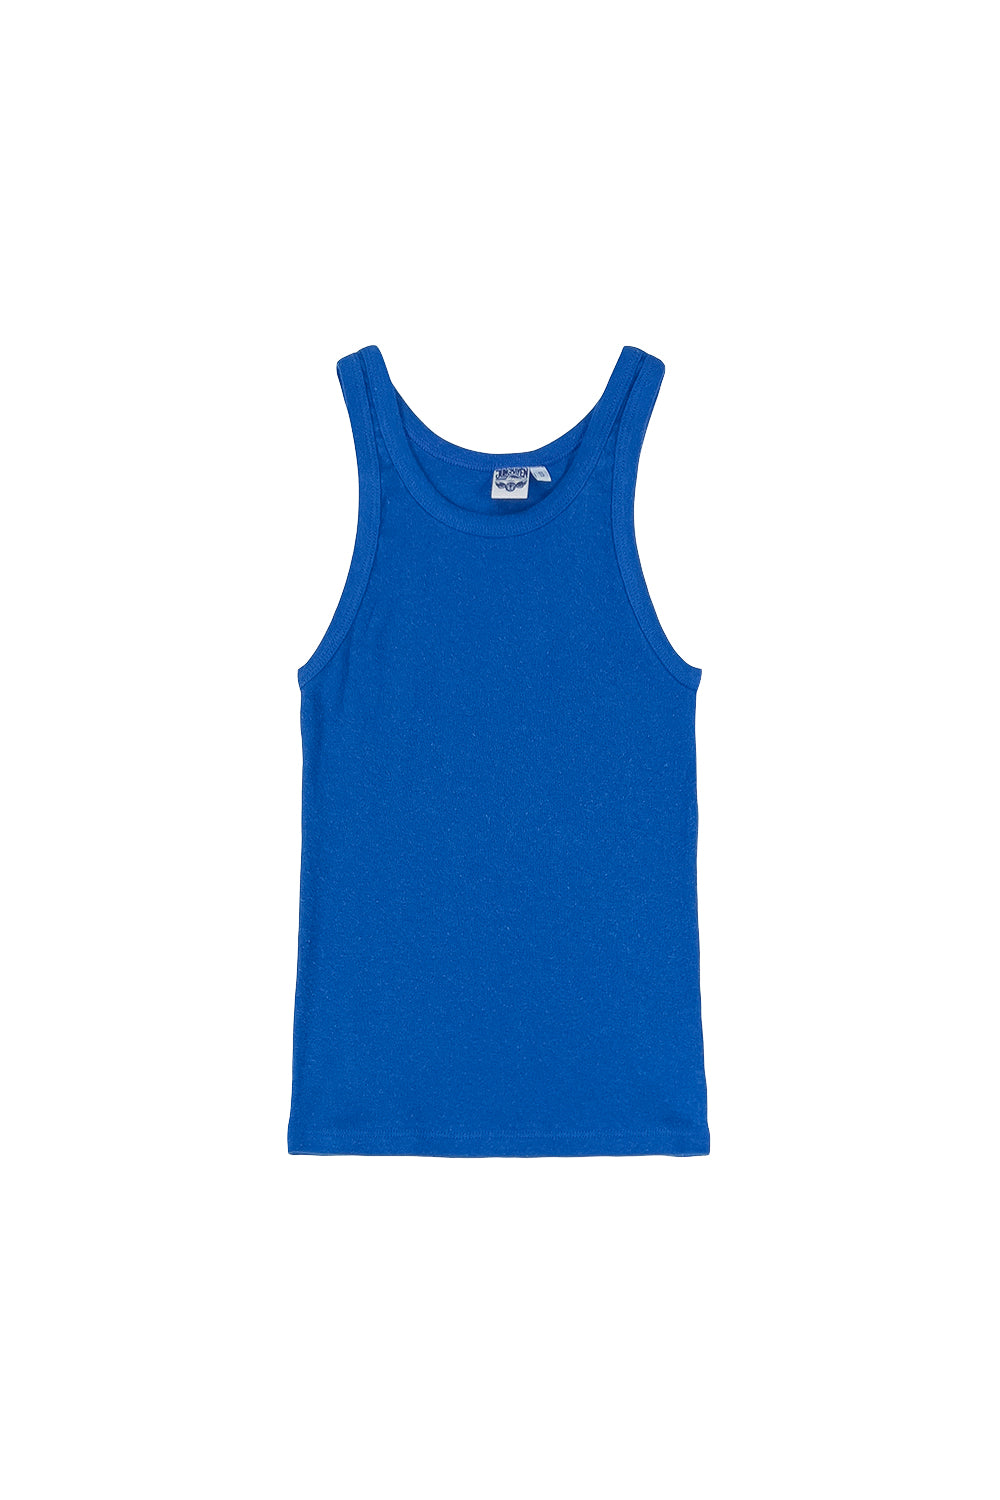 Alta Tank | Jungmaven Hemp Clothing & Accessories / Color: Galaxy Blue